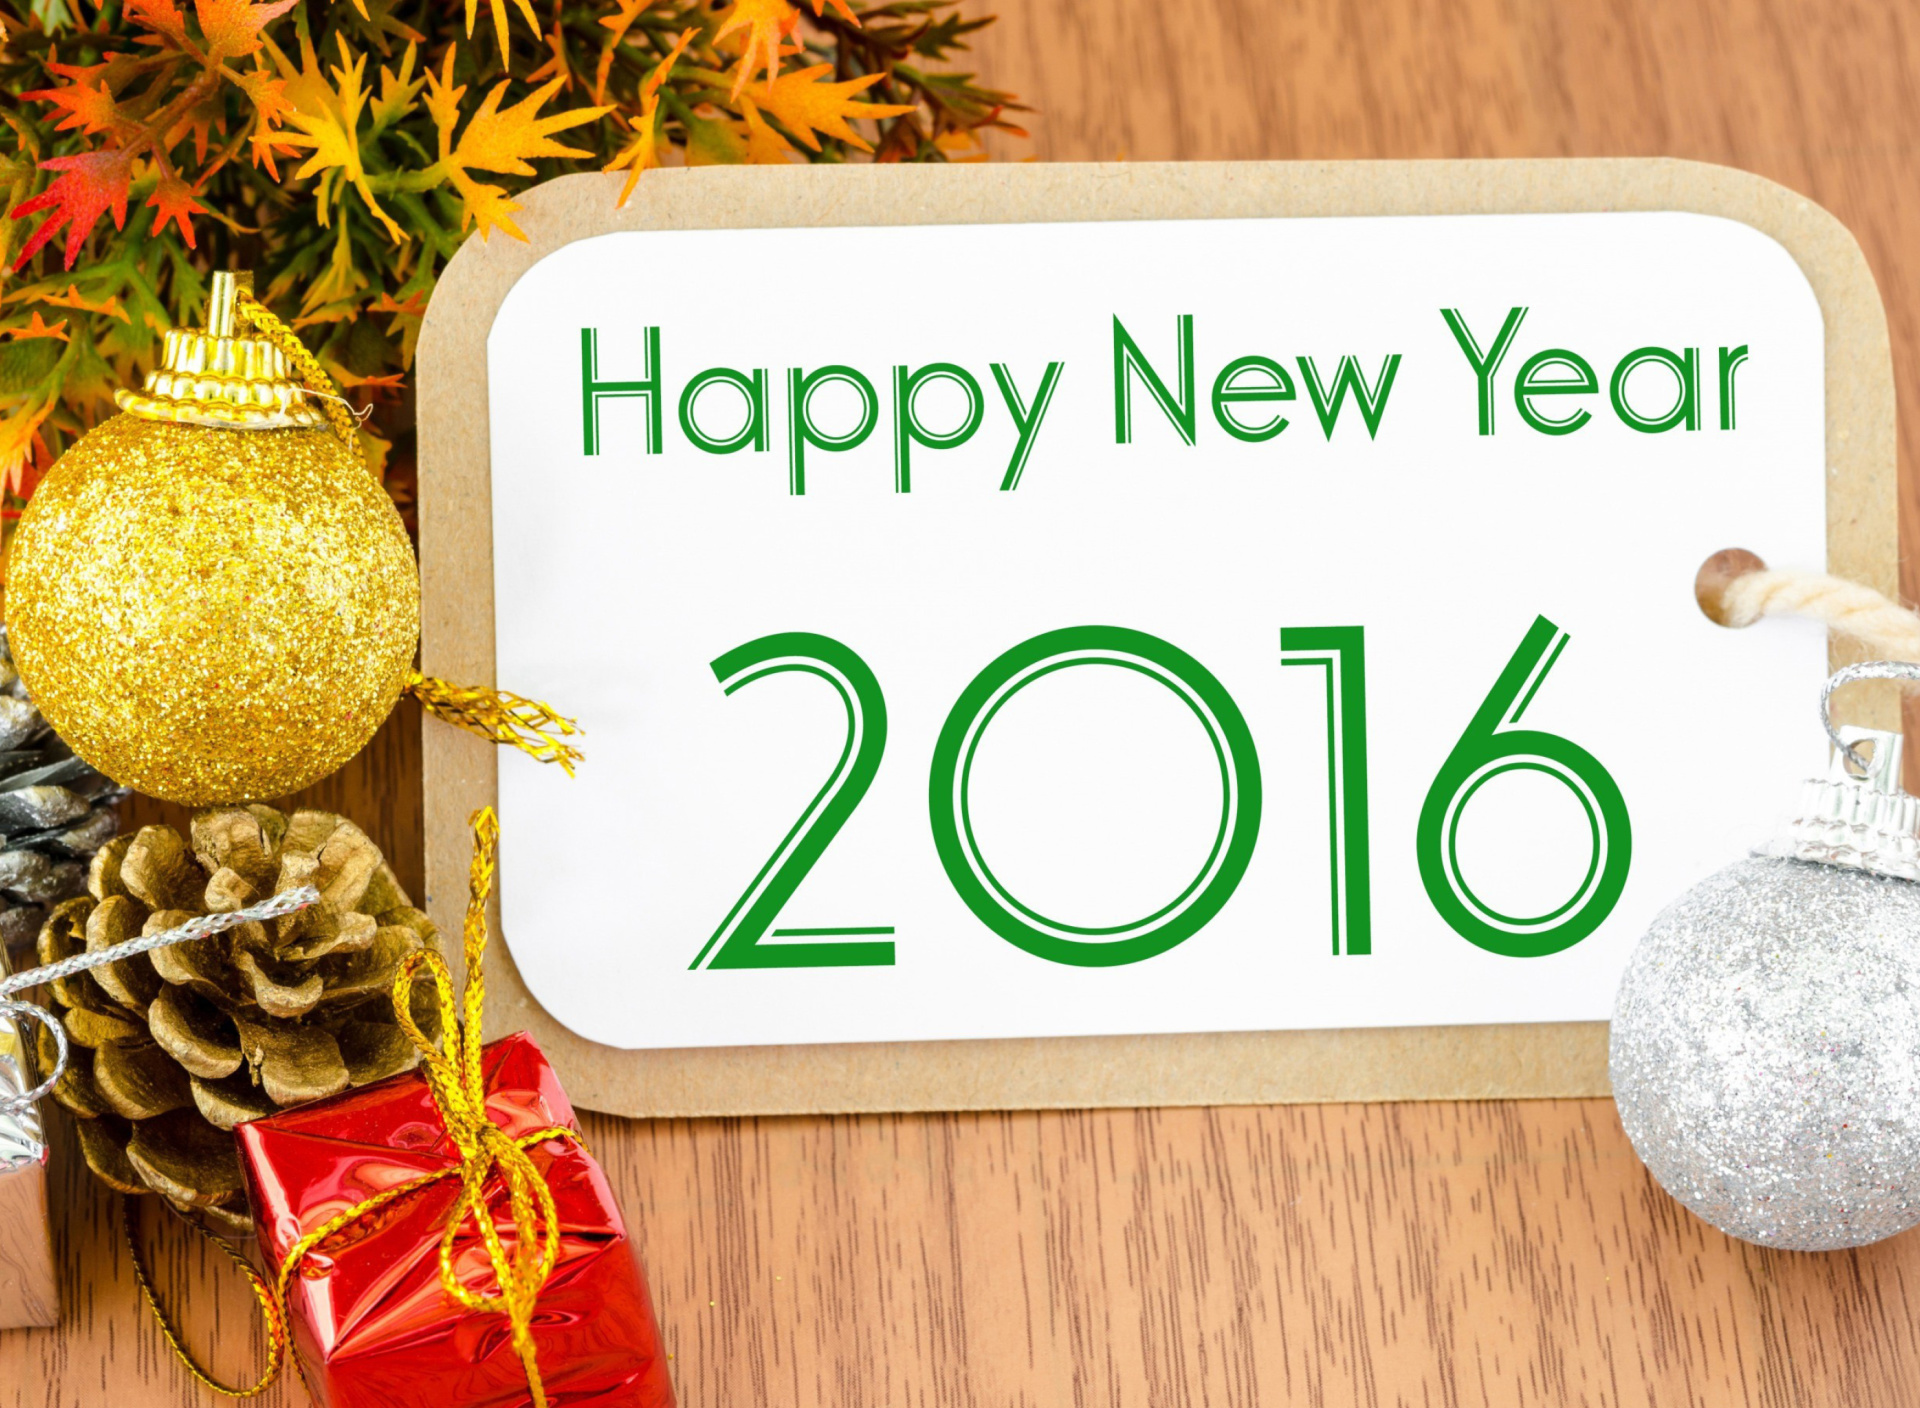 Happy New Year 2016 Card wallpaper 1920x1408